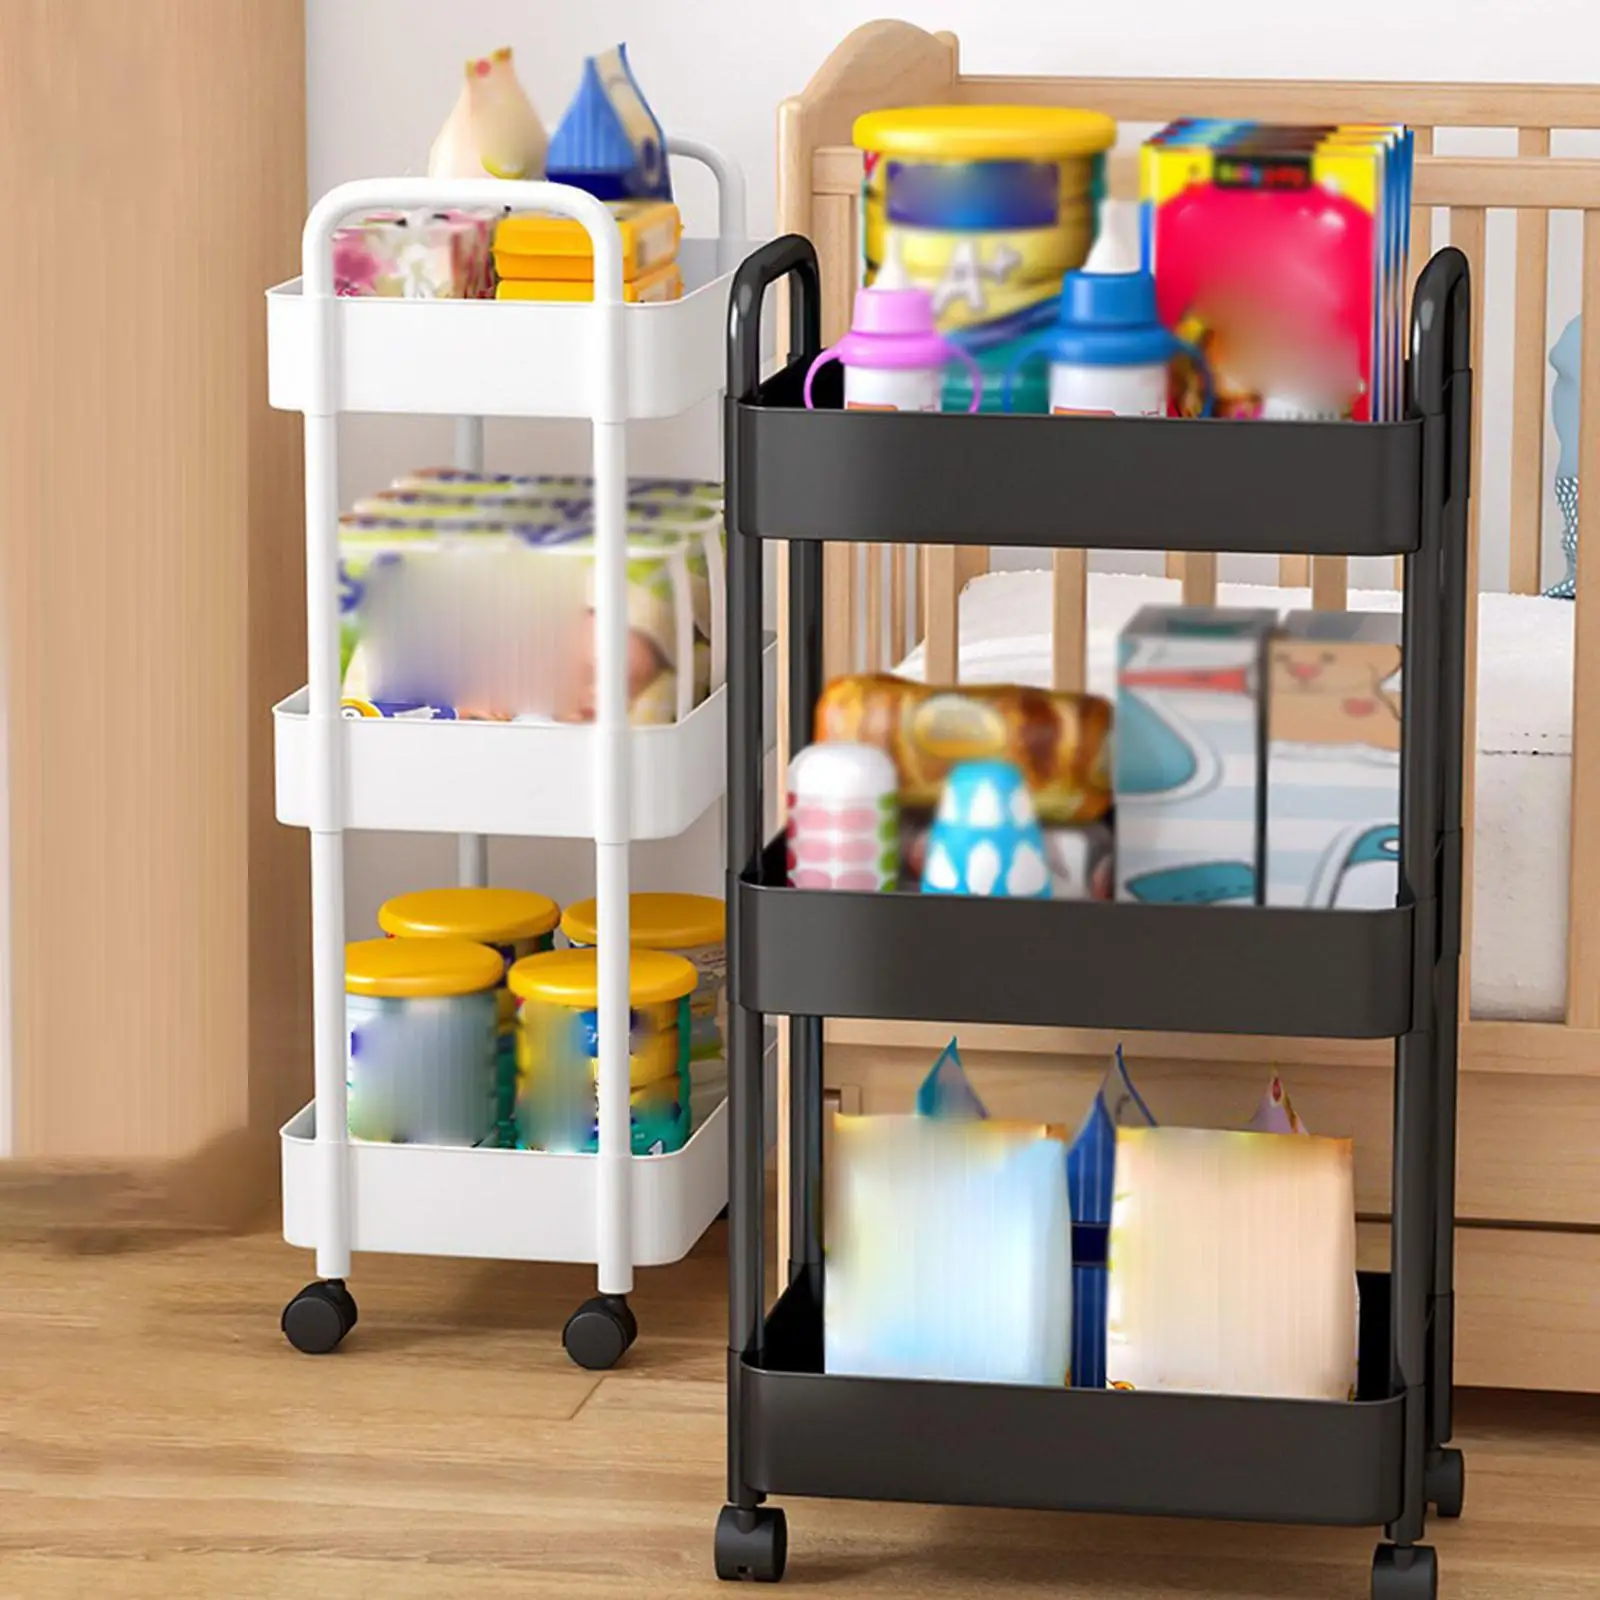 3 Tier Mobile Utility Cart Organizer Holder Free Standing Storage Shelves Corner Shelf